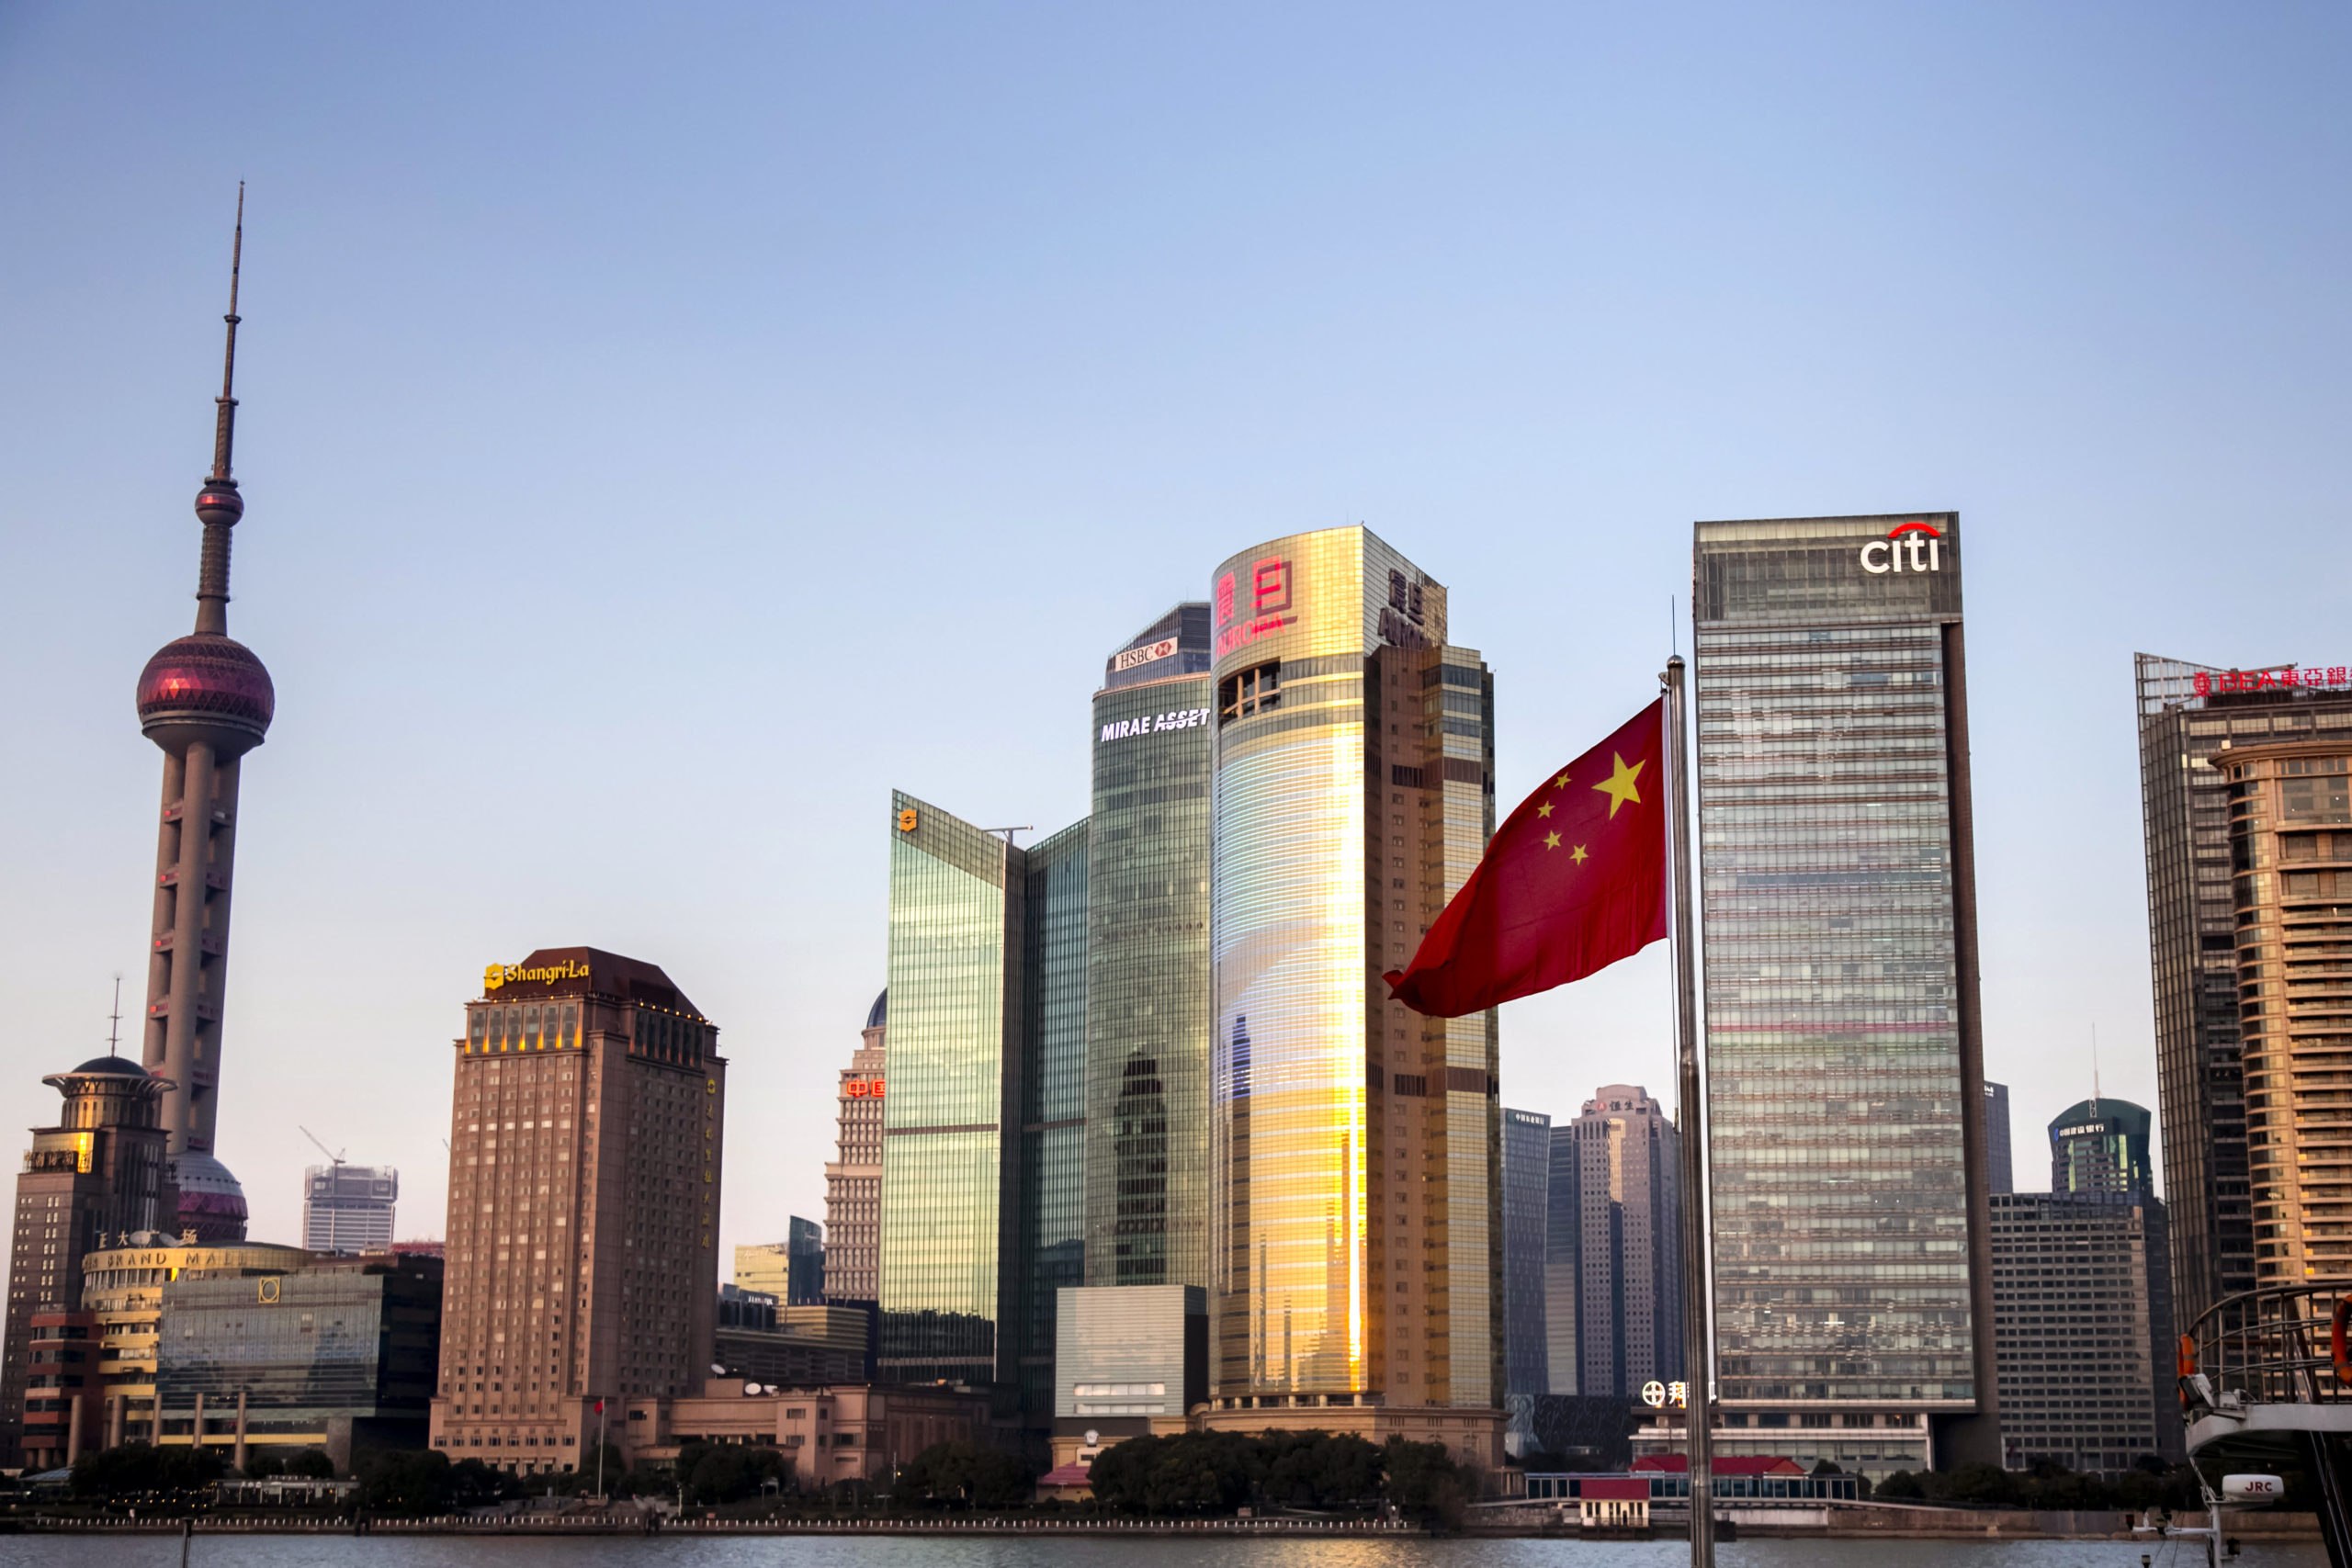 20 strategists on China economic outlook, regulatory risks